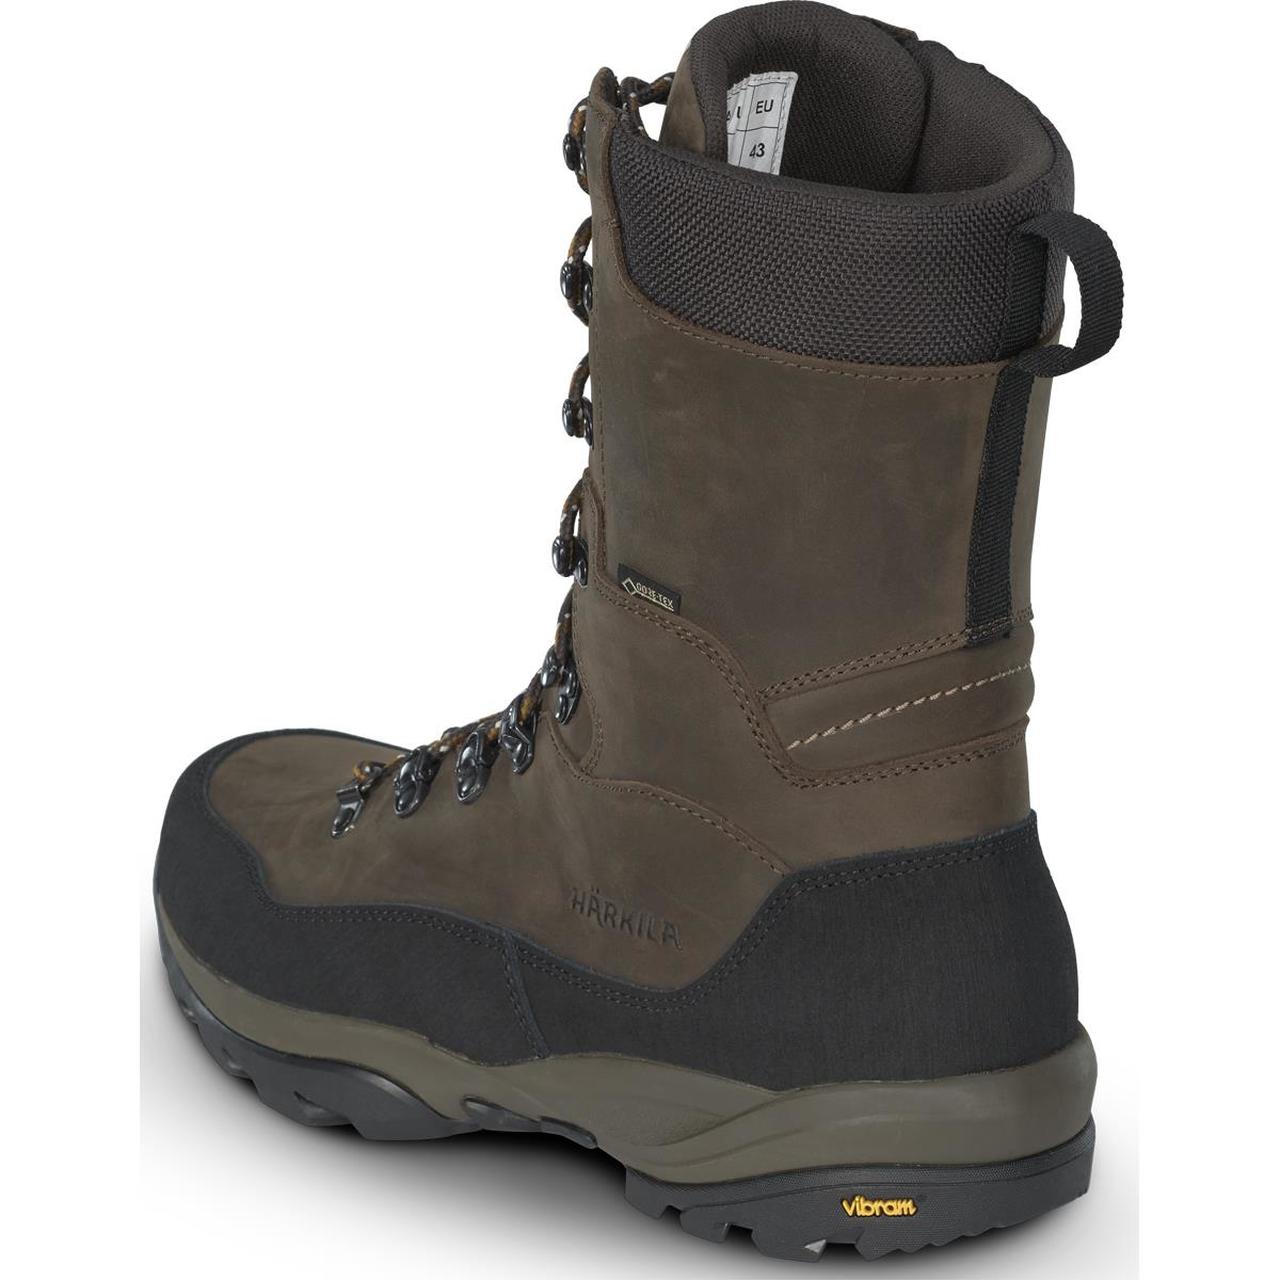 Harkila Pro Hunter Ridge GTX Boots